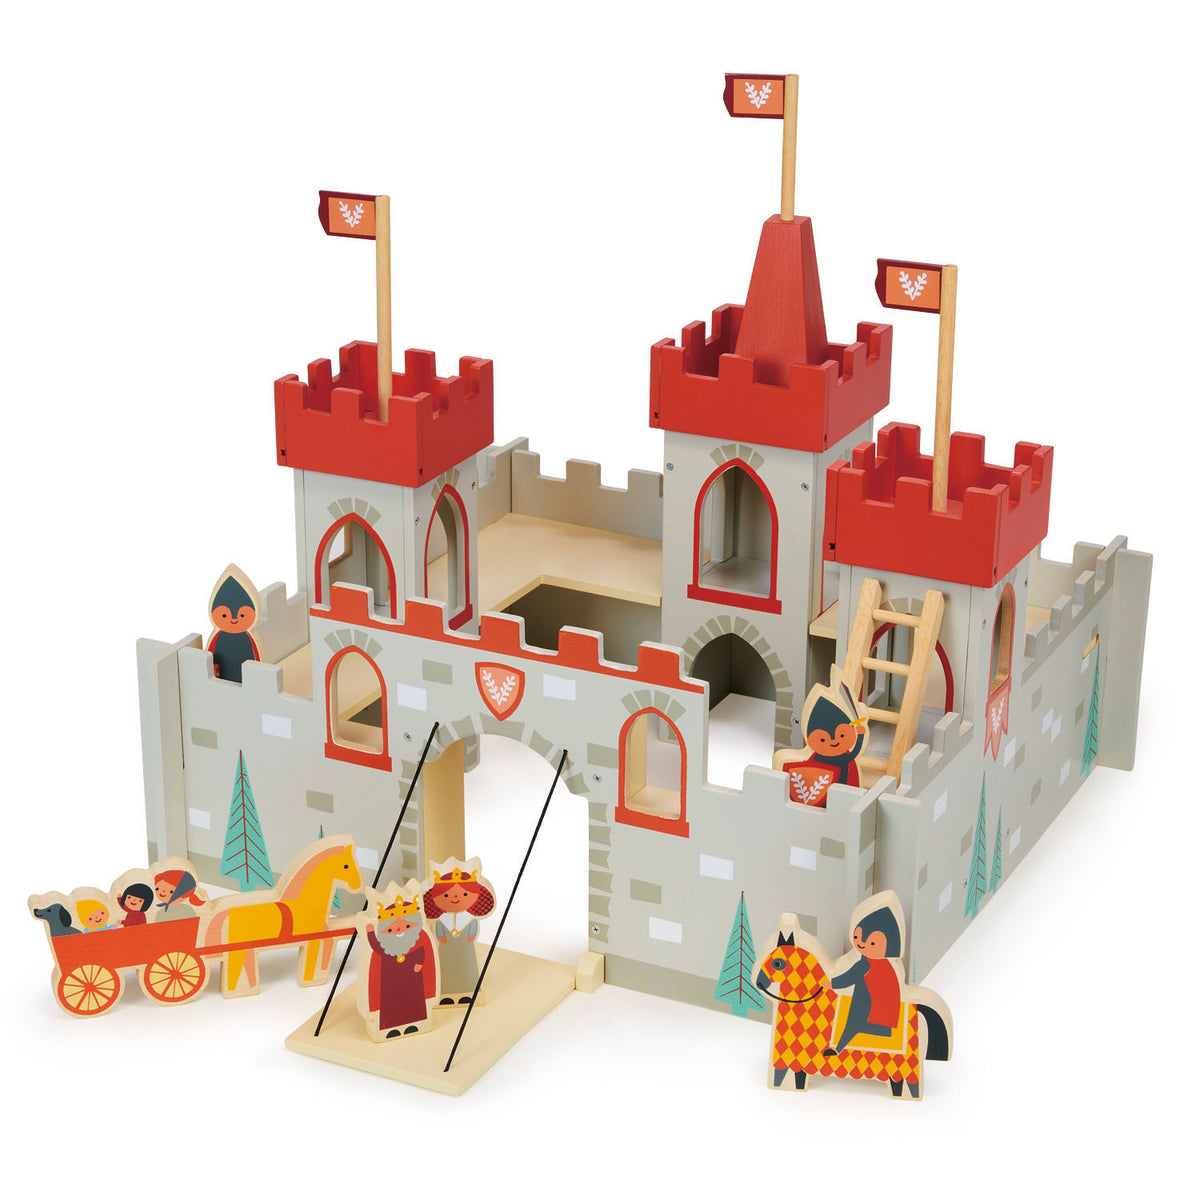 King’s Castle Wooden Toy Set